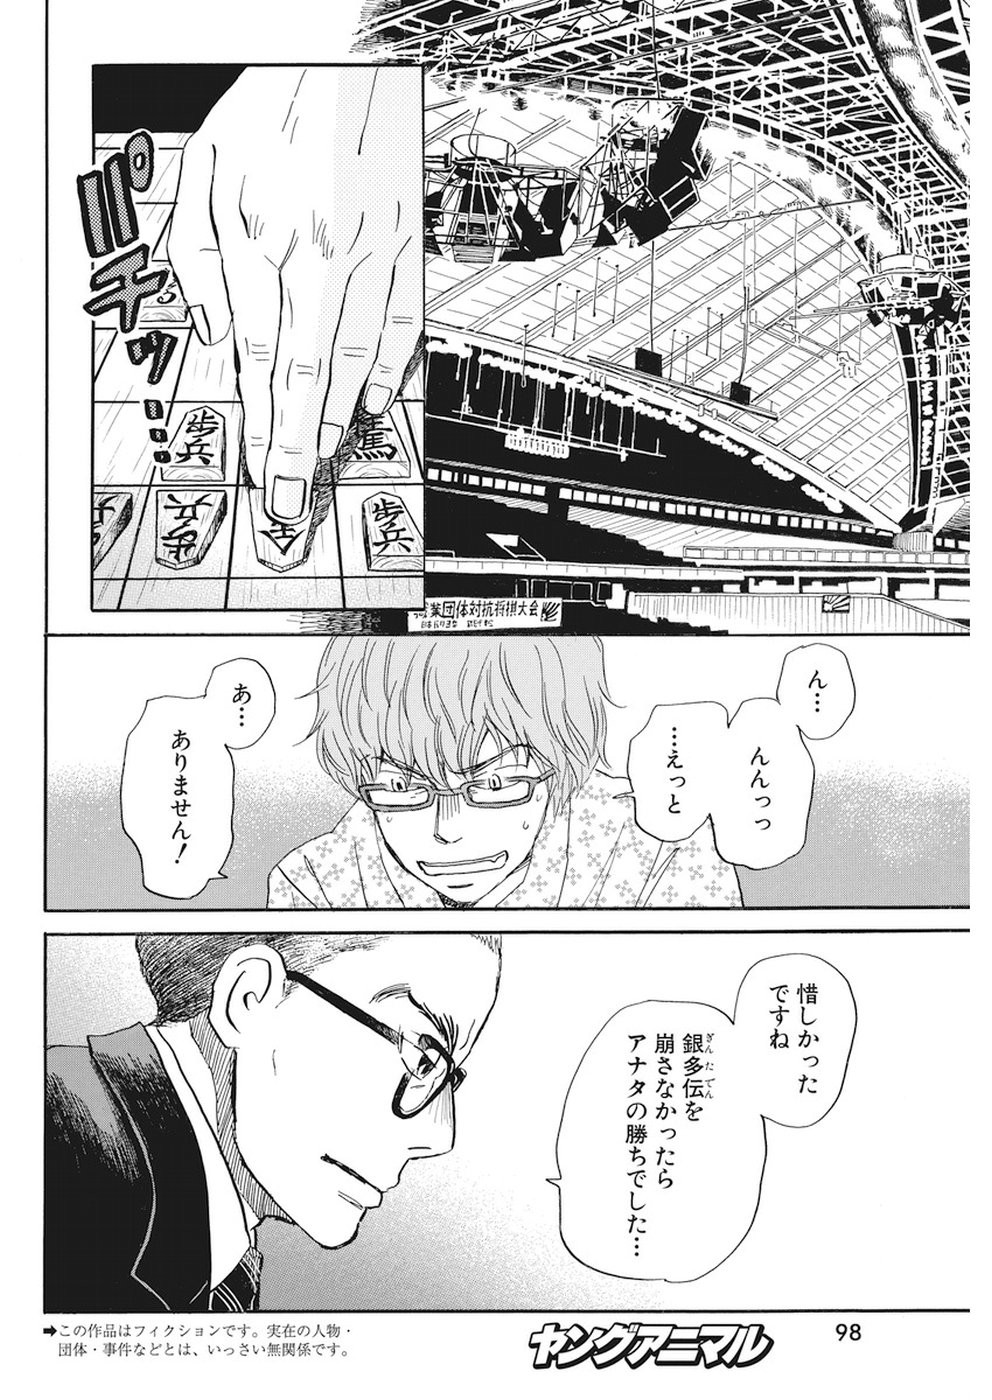 3 Gatsu no Lion - Chapter 152 - Page 2